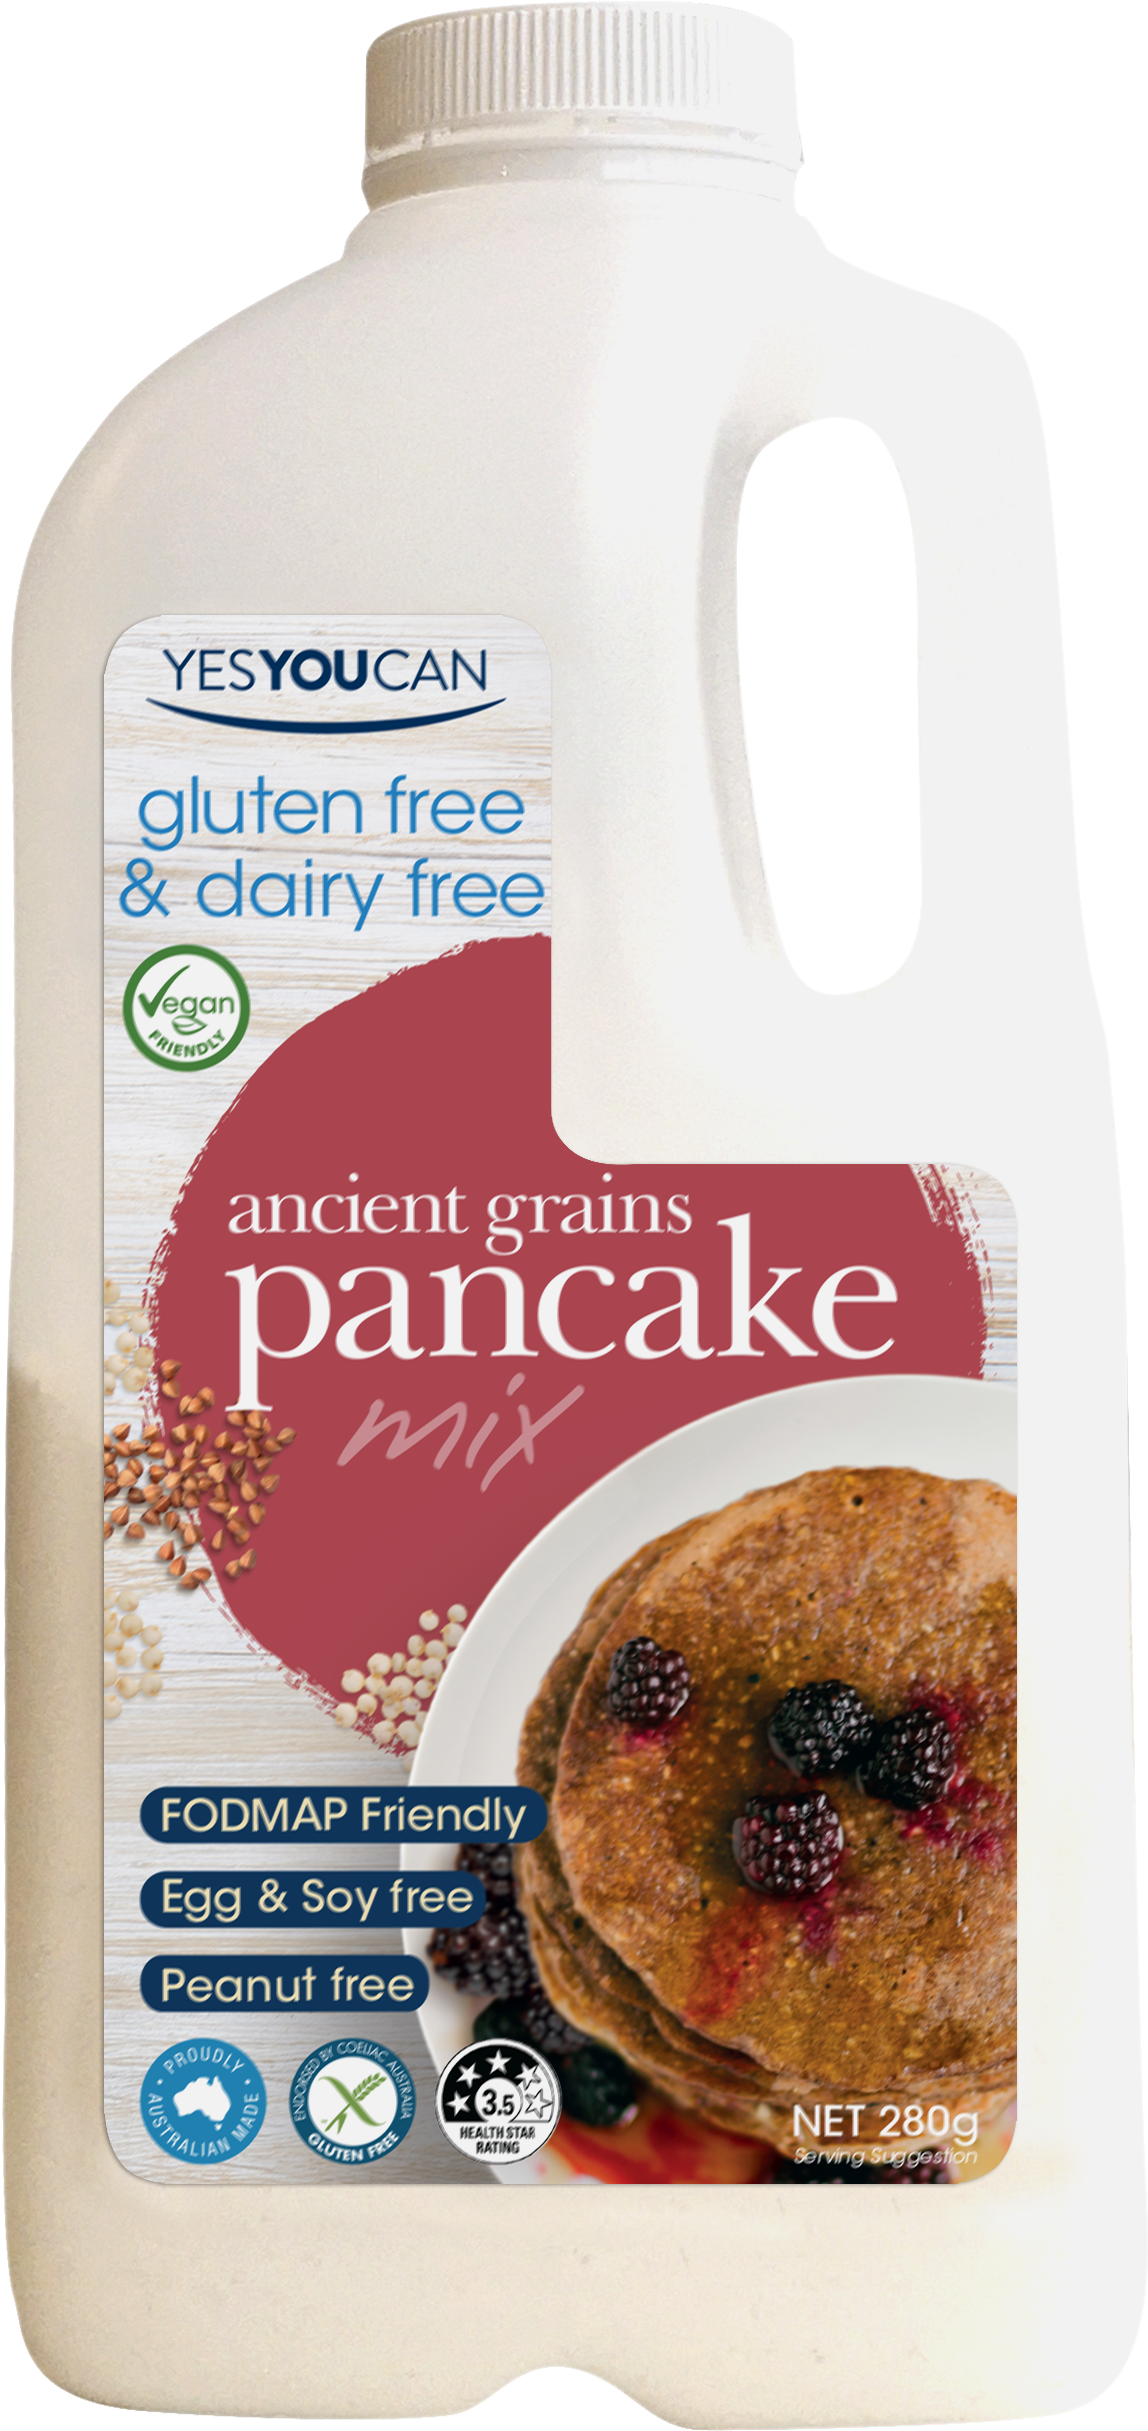  ancient grain pancake gluten free yesyoucan front image product photo vegan dairy free egg free